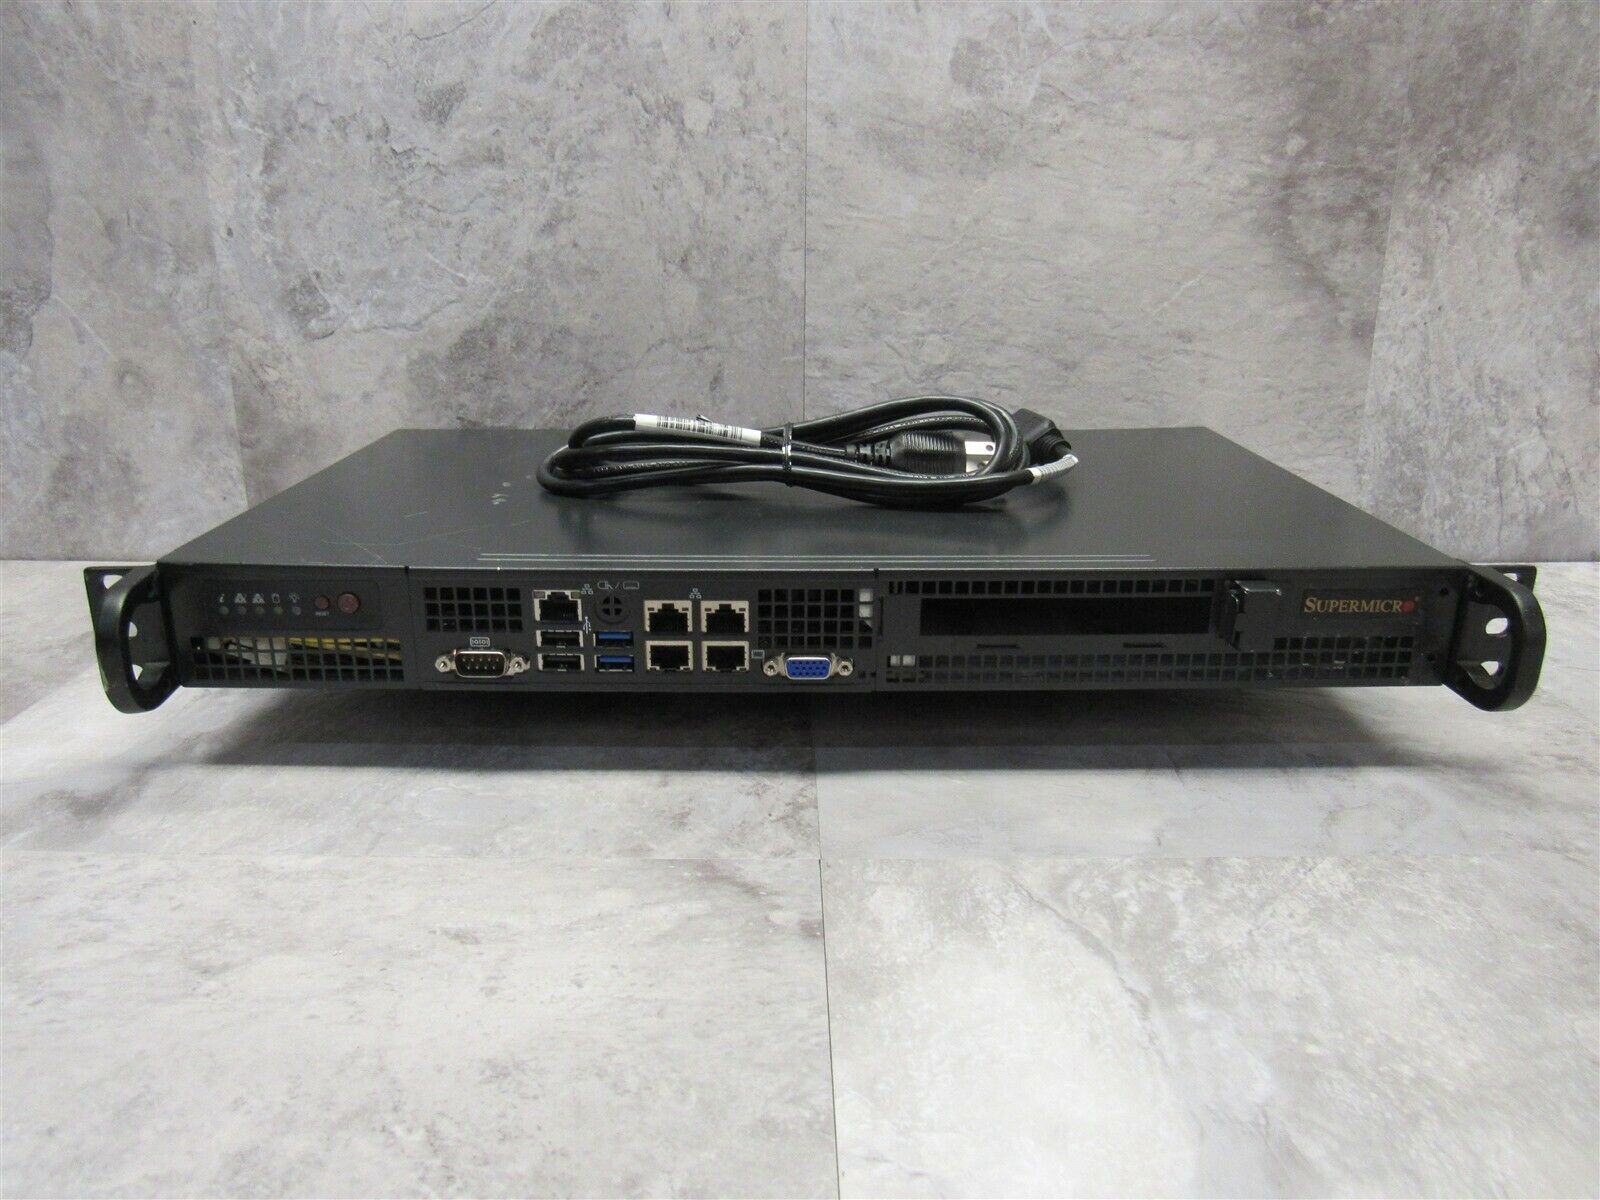 SUPERMICRO 5018A-FTN4 Intel Atom C2758 2.4GHz 8GB RAM 1U Rackmount Server